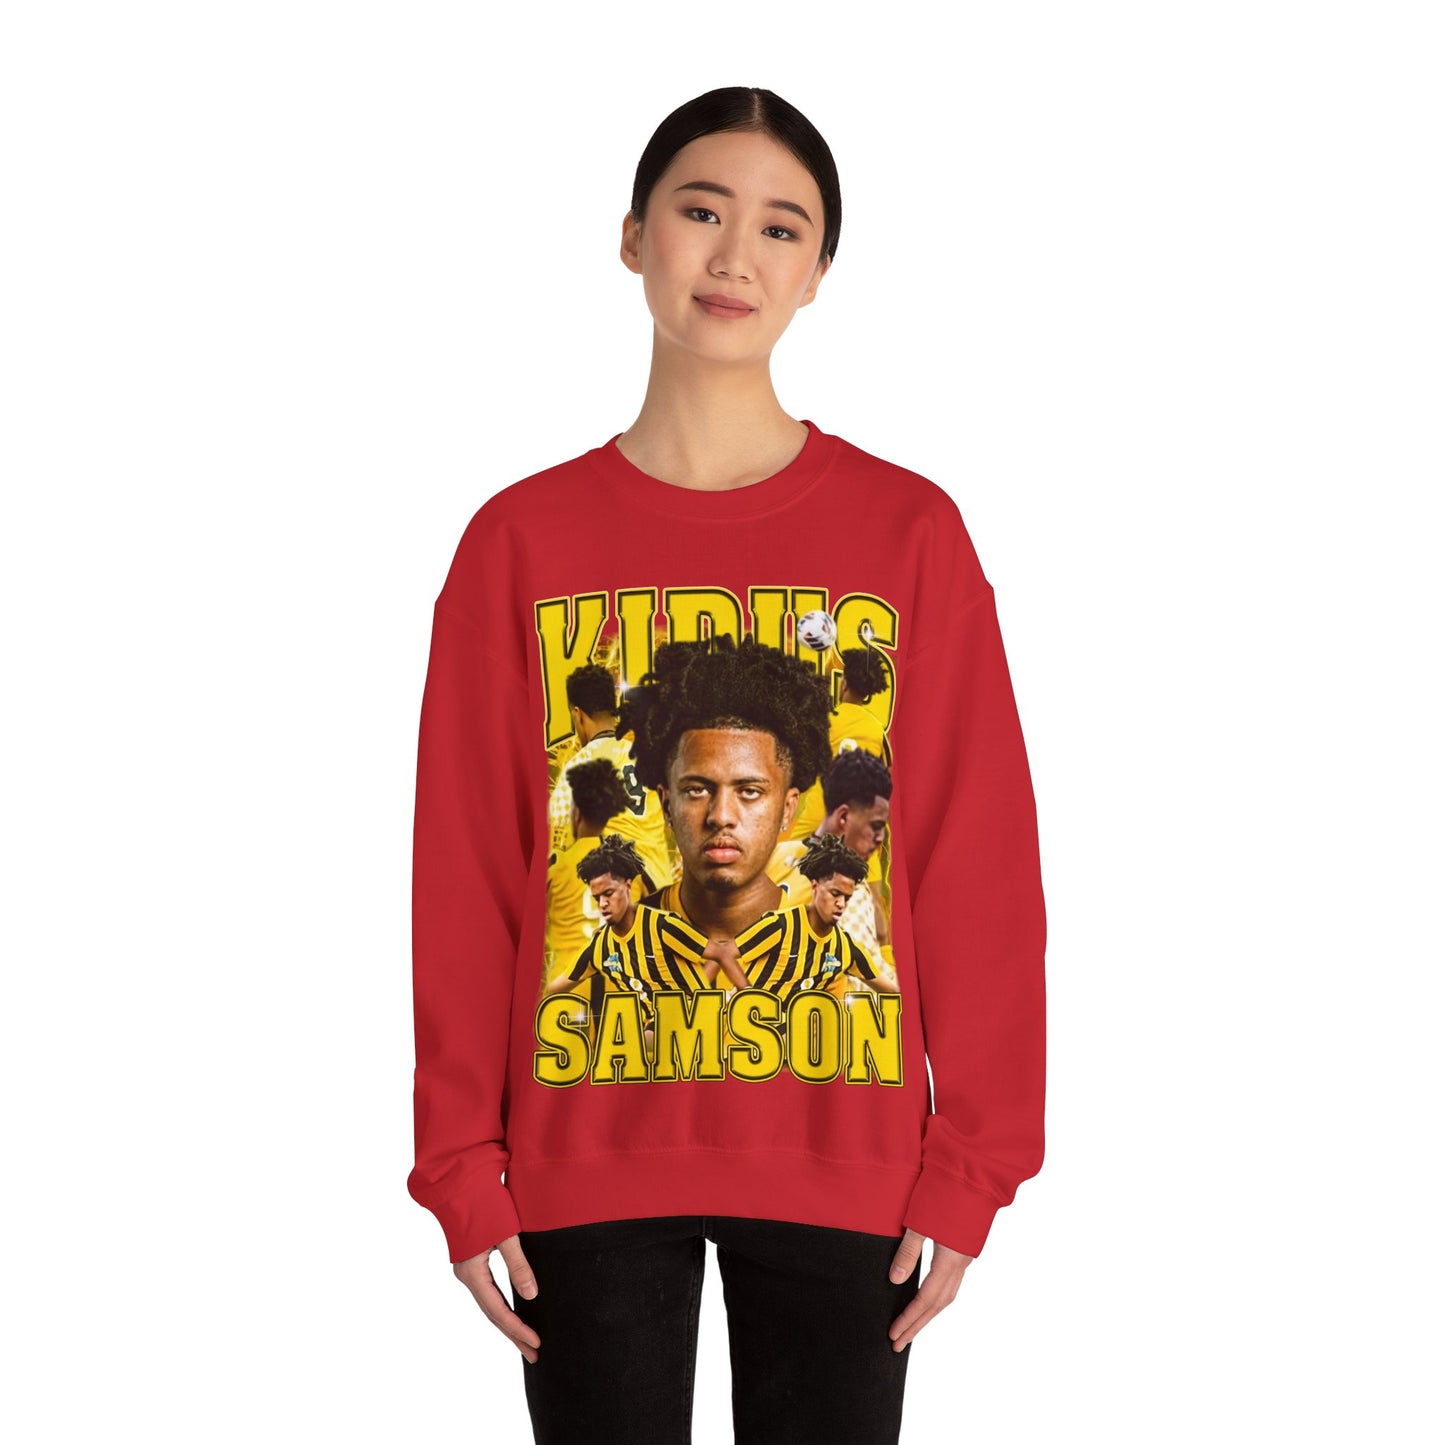 Kidus Samson Crewneck Sweatshirt